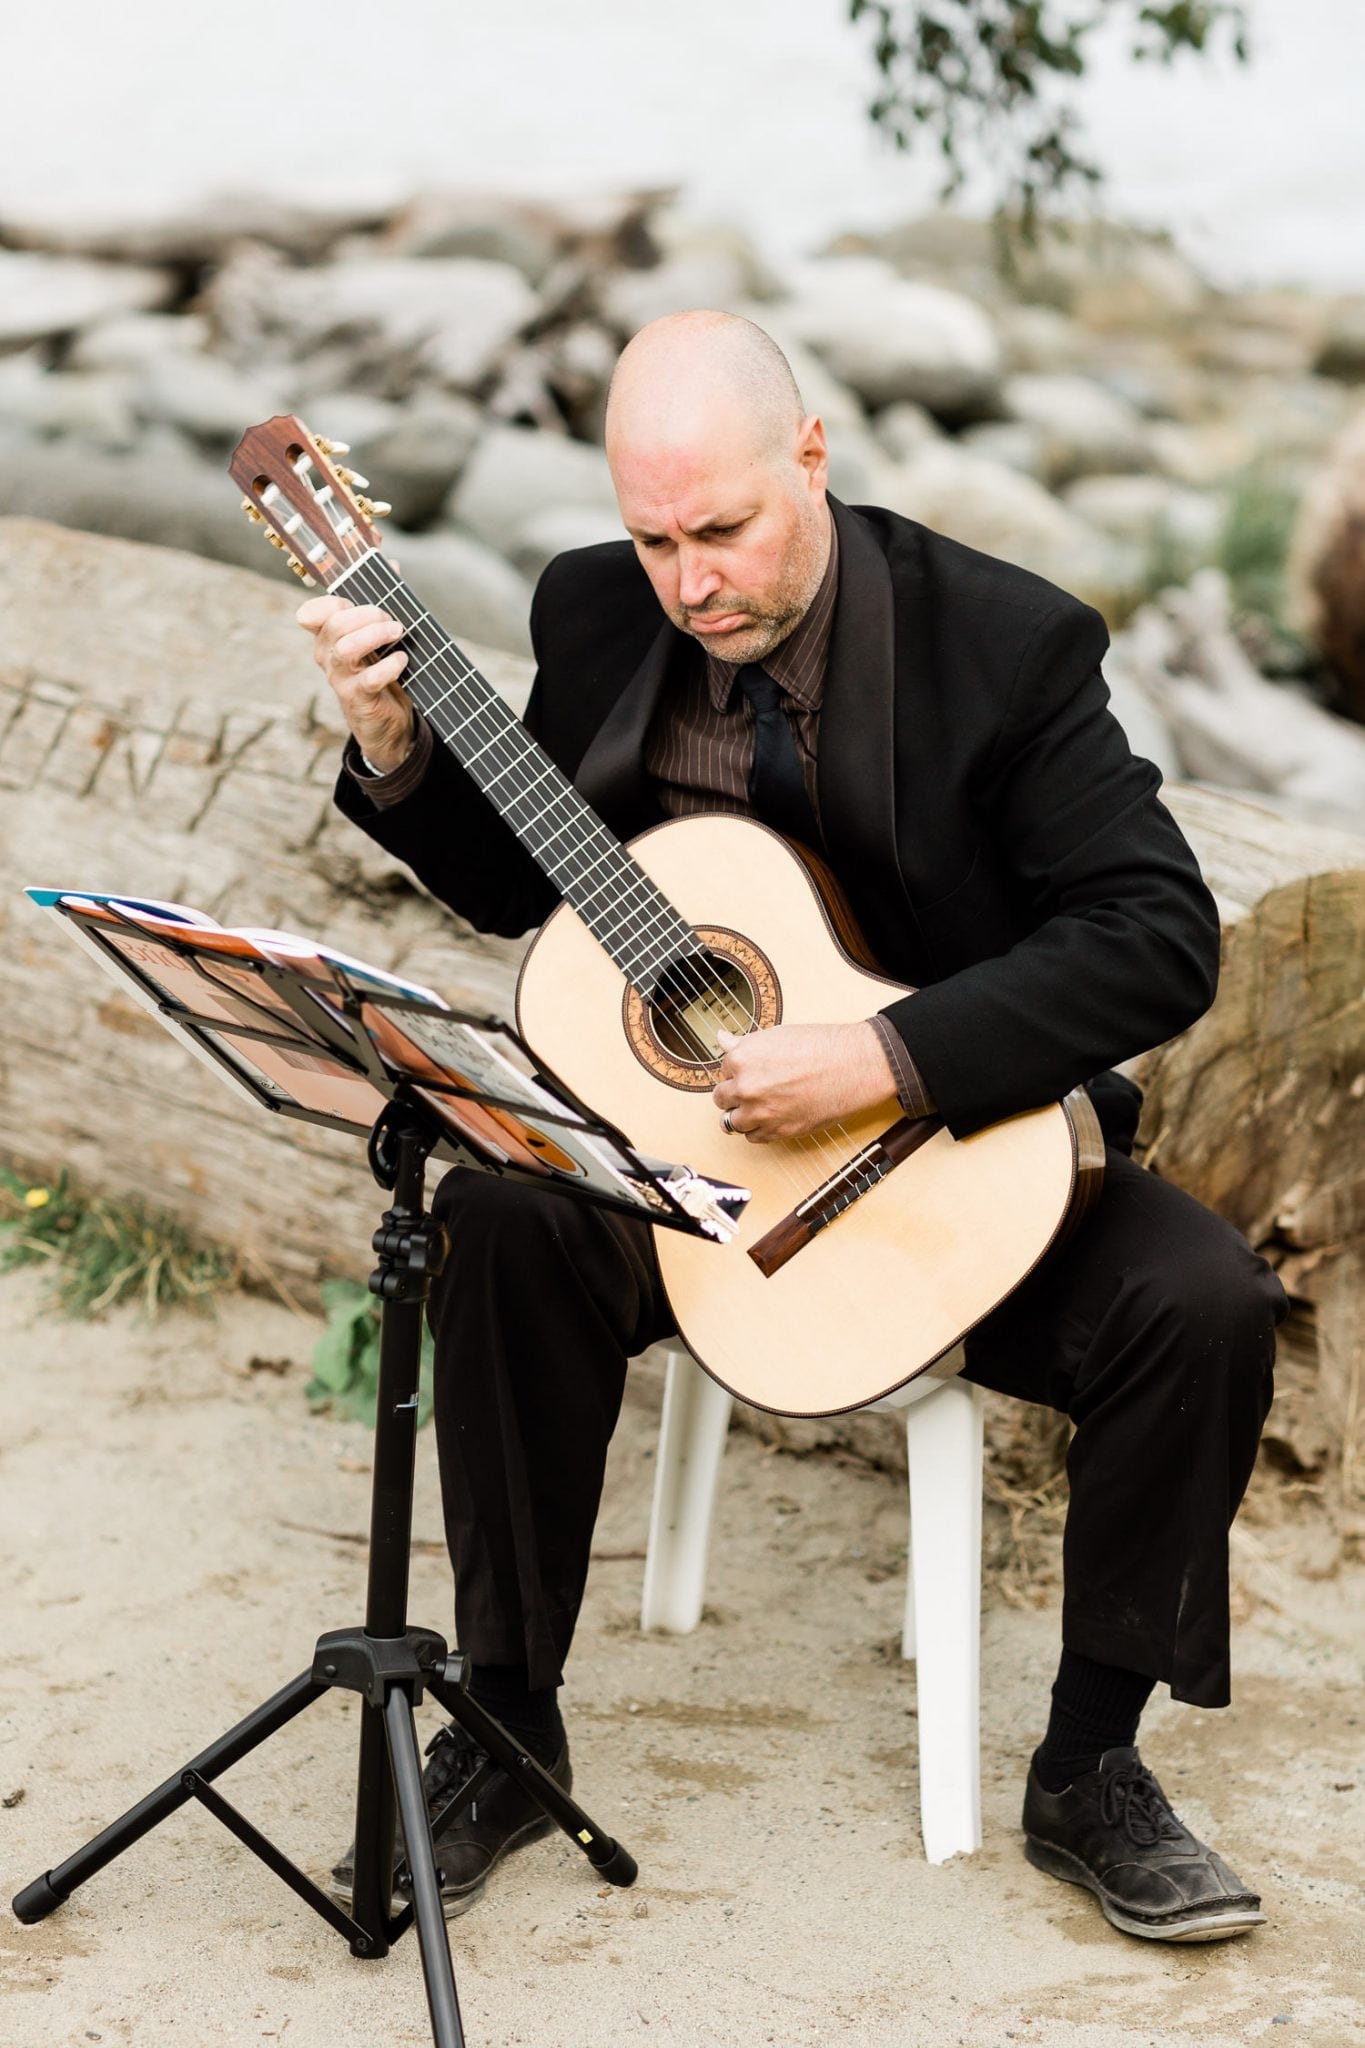 Guitarist on the wedding | Vancouver wedding photographer